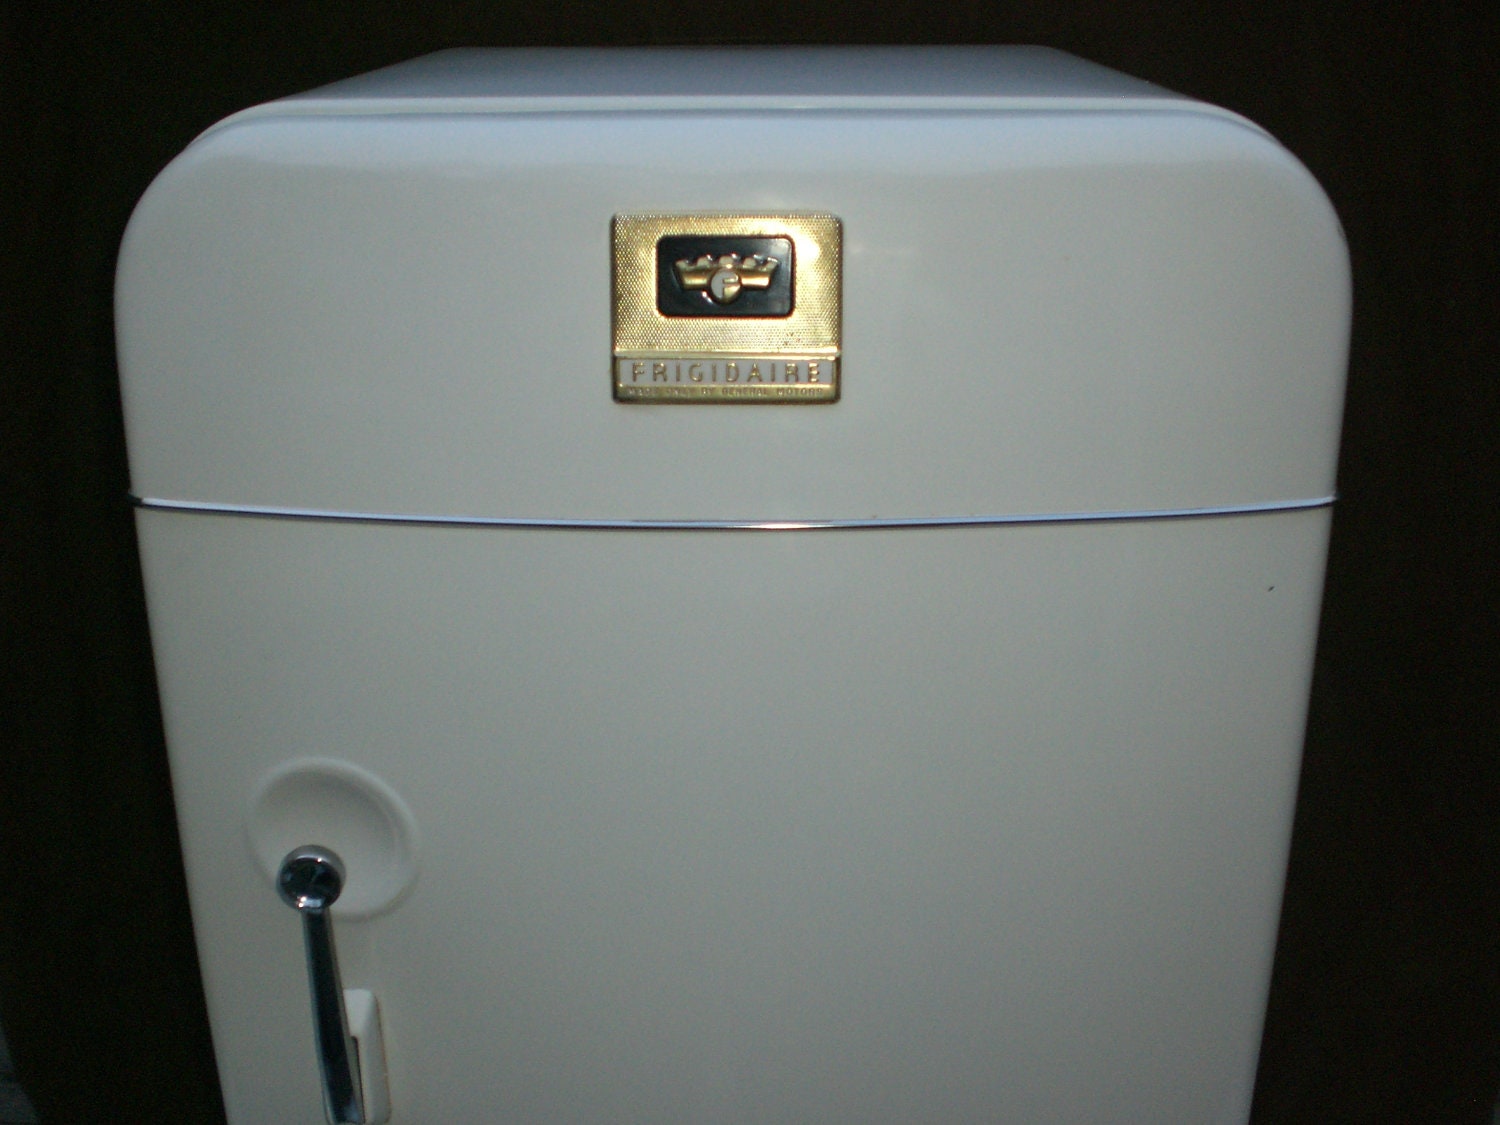 Vintage 50's Frigidaire Refrigerator - NICE!!! Il_570xN.367087132_j616